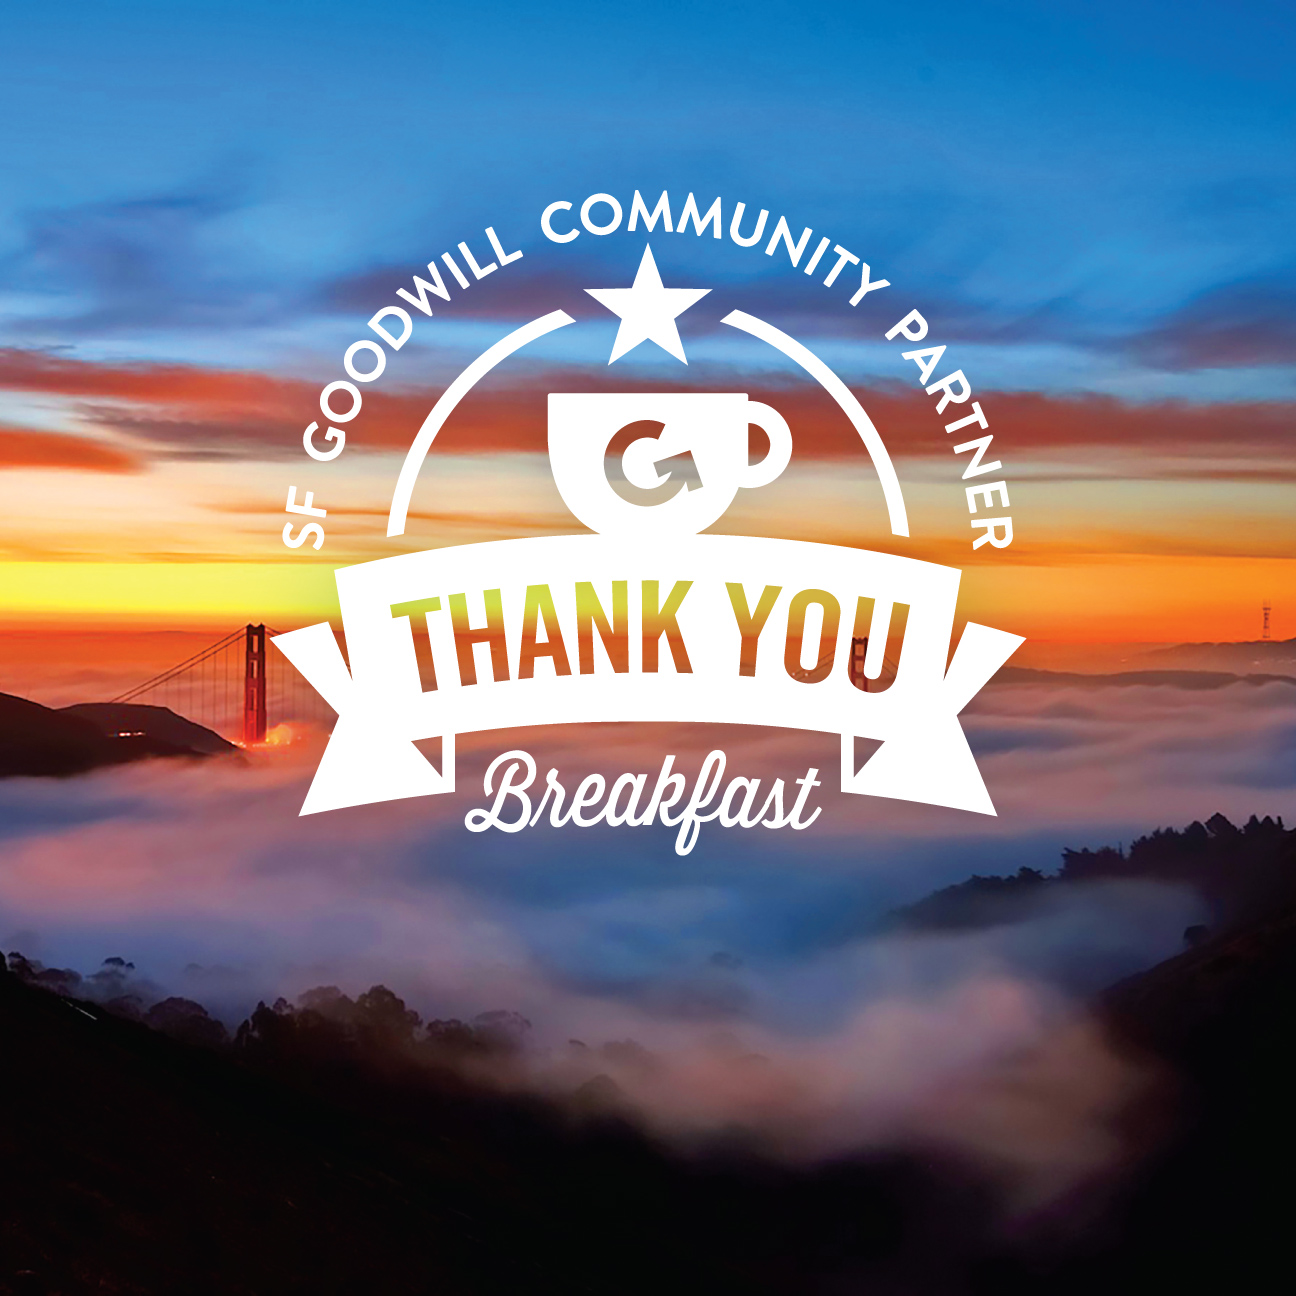 Michael Ham - Portfolio - SF Goodwill Event Badging - Thank You Breakfast